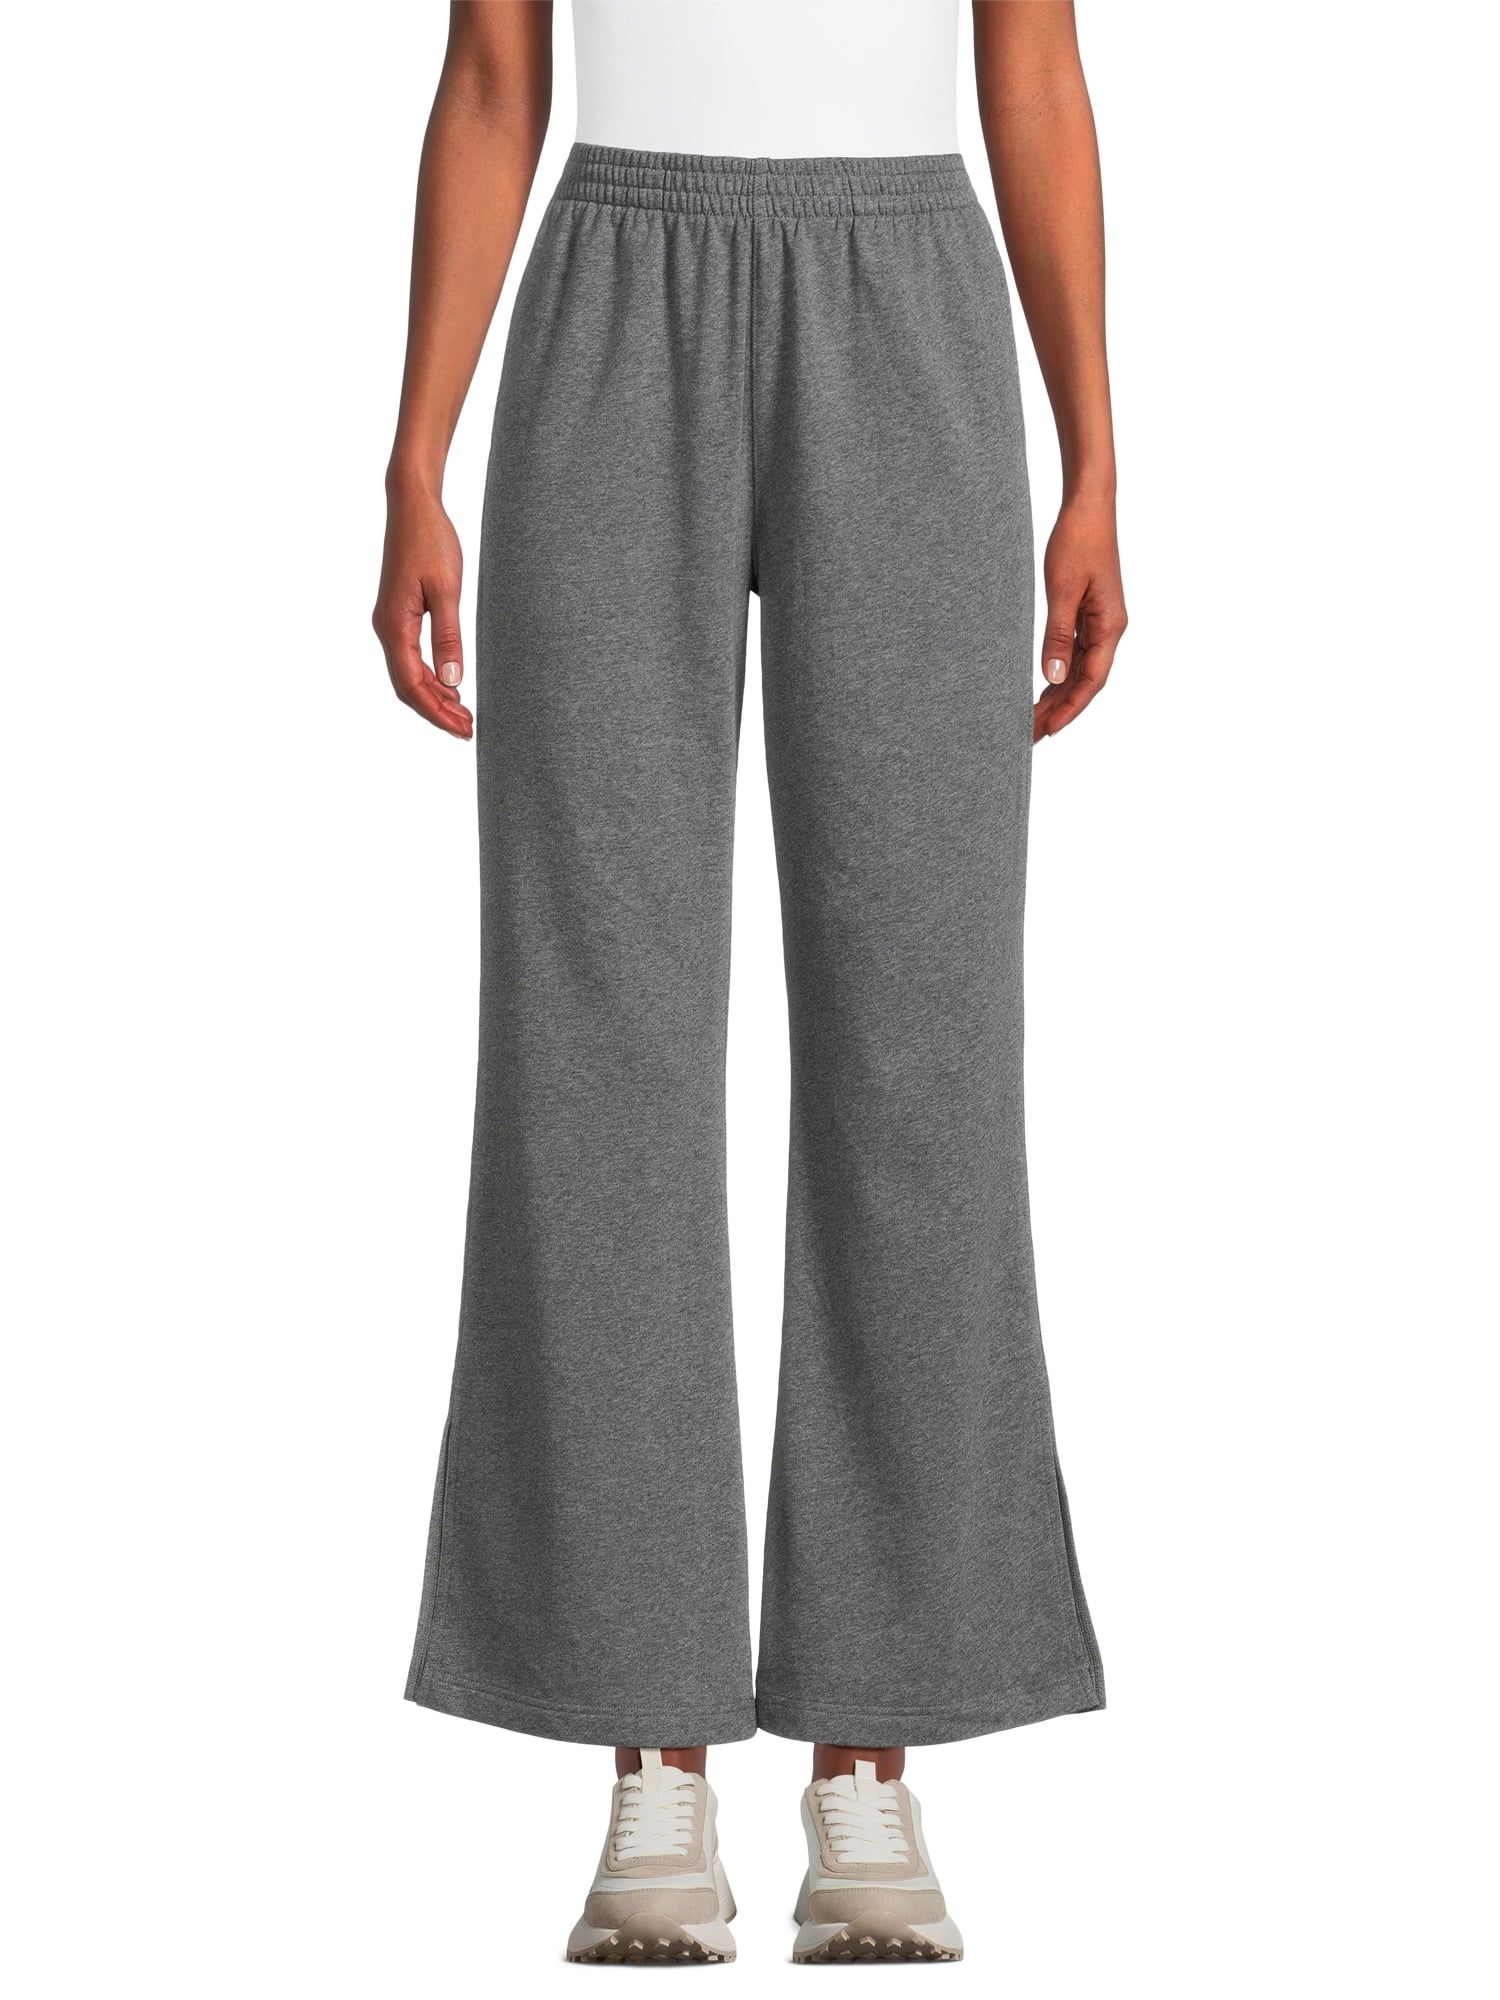 Athletic Works Women's Wide Leg Pants with Side Vents, Sizes XS-XXXL | Walmart (US)